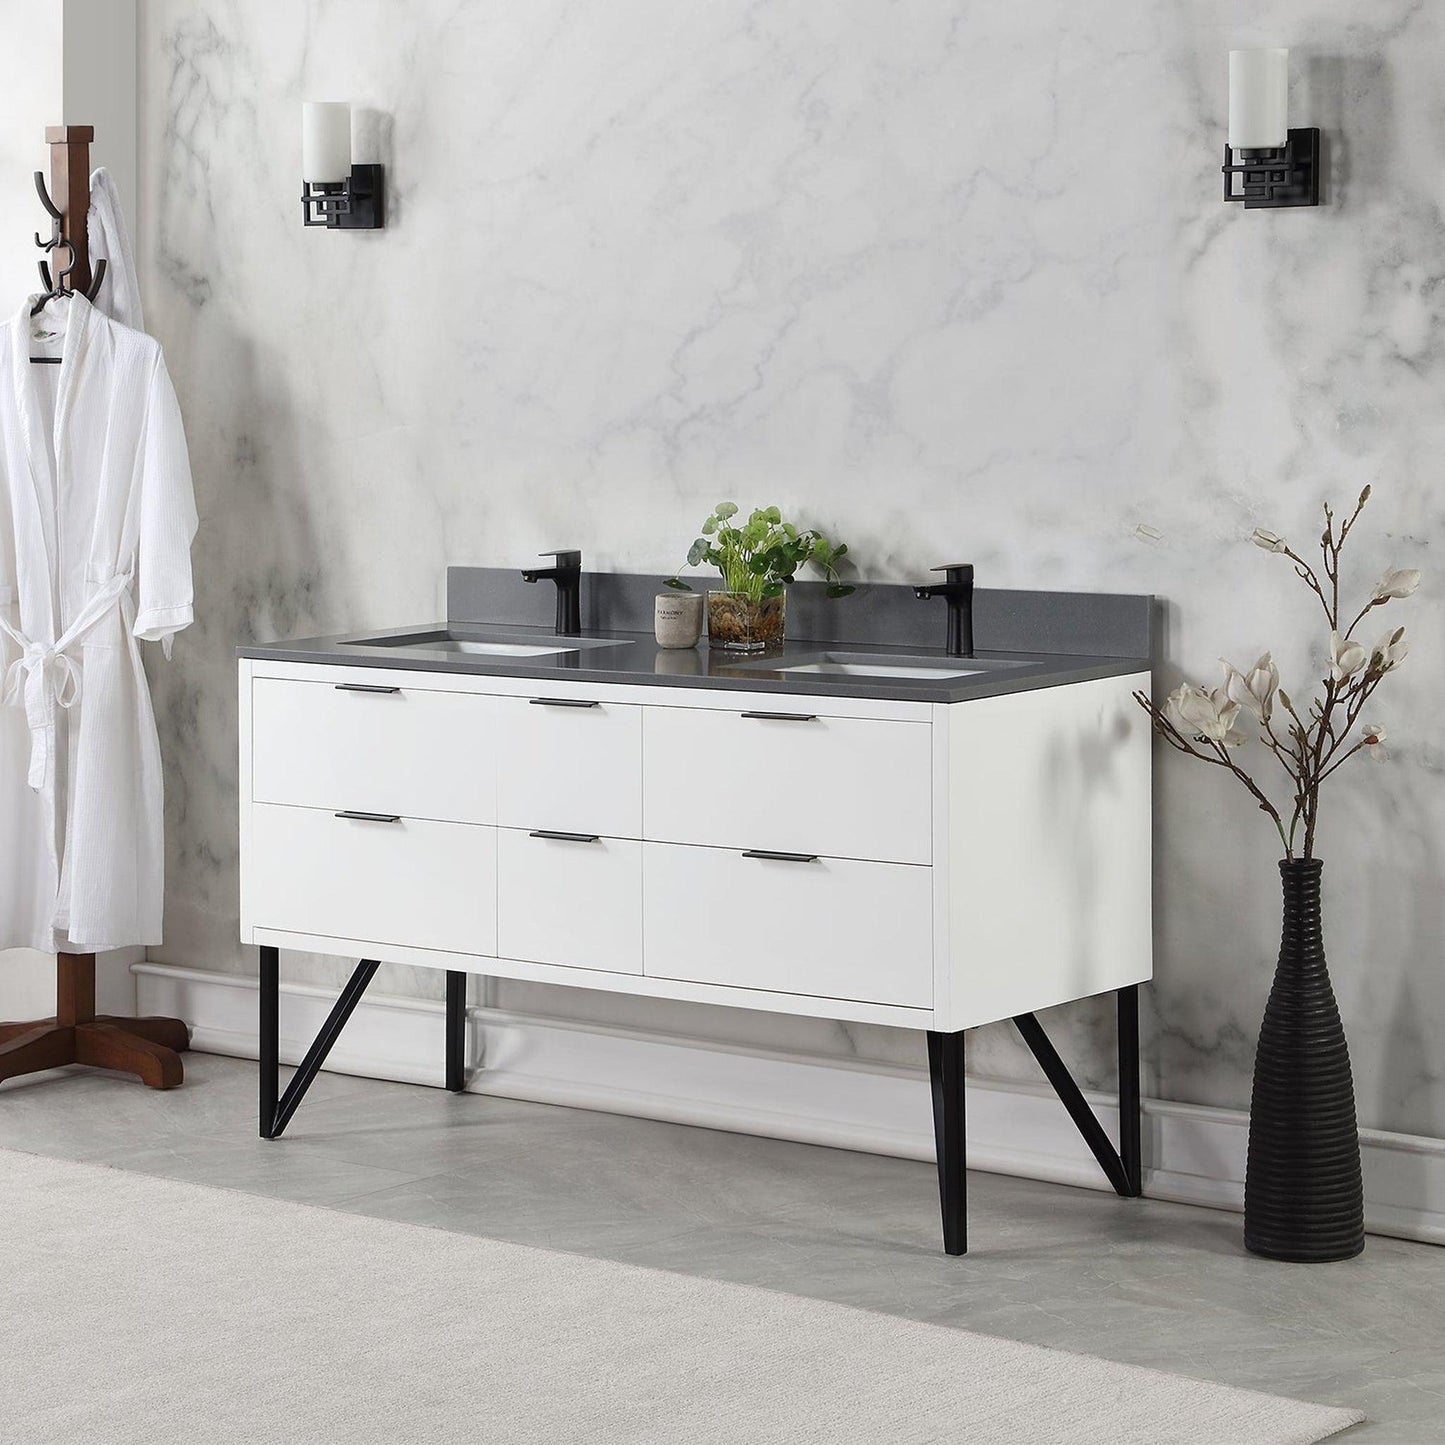 Altair Helios 60" White Freestanding Double Bathroom Vanity Set With Concrete Gray Composite Stone Top, Double Rectangular Undermount Ceramic Sinks, Overflow, and Backsplash